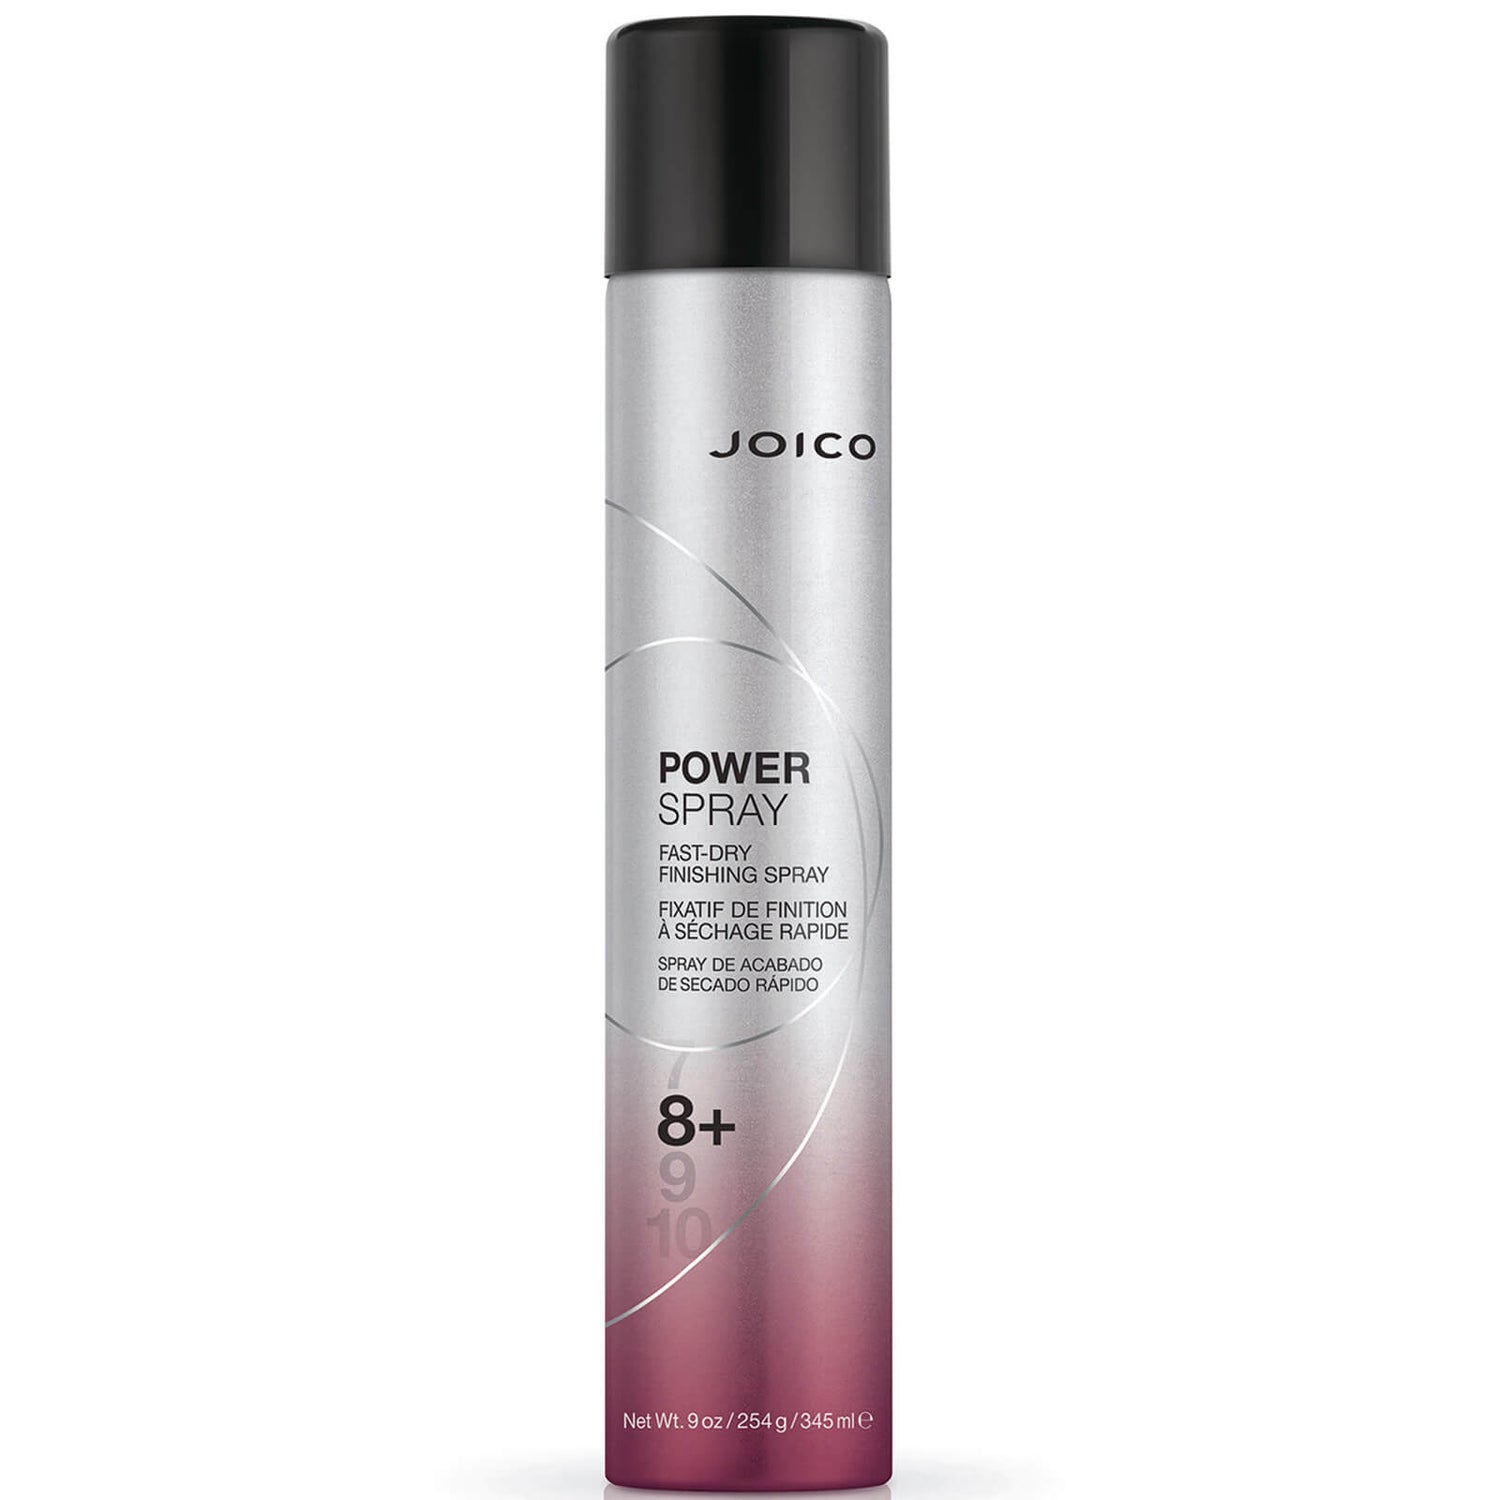 Spray Potente da Joico (300 ml)